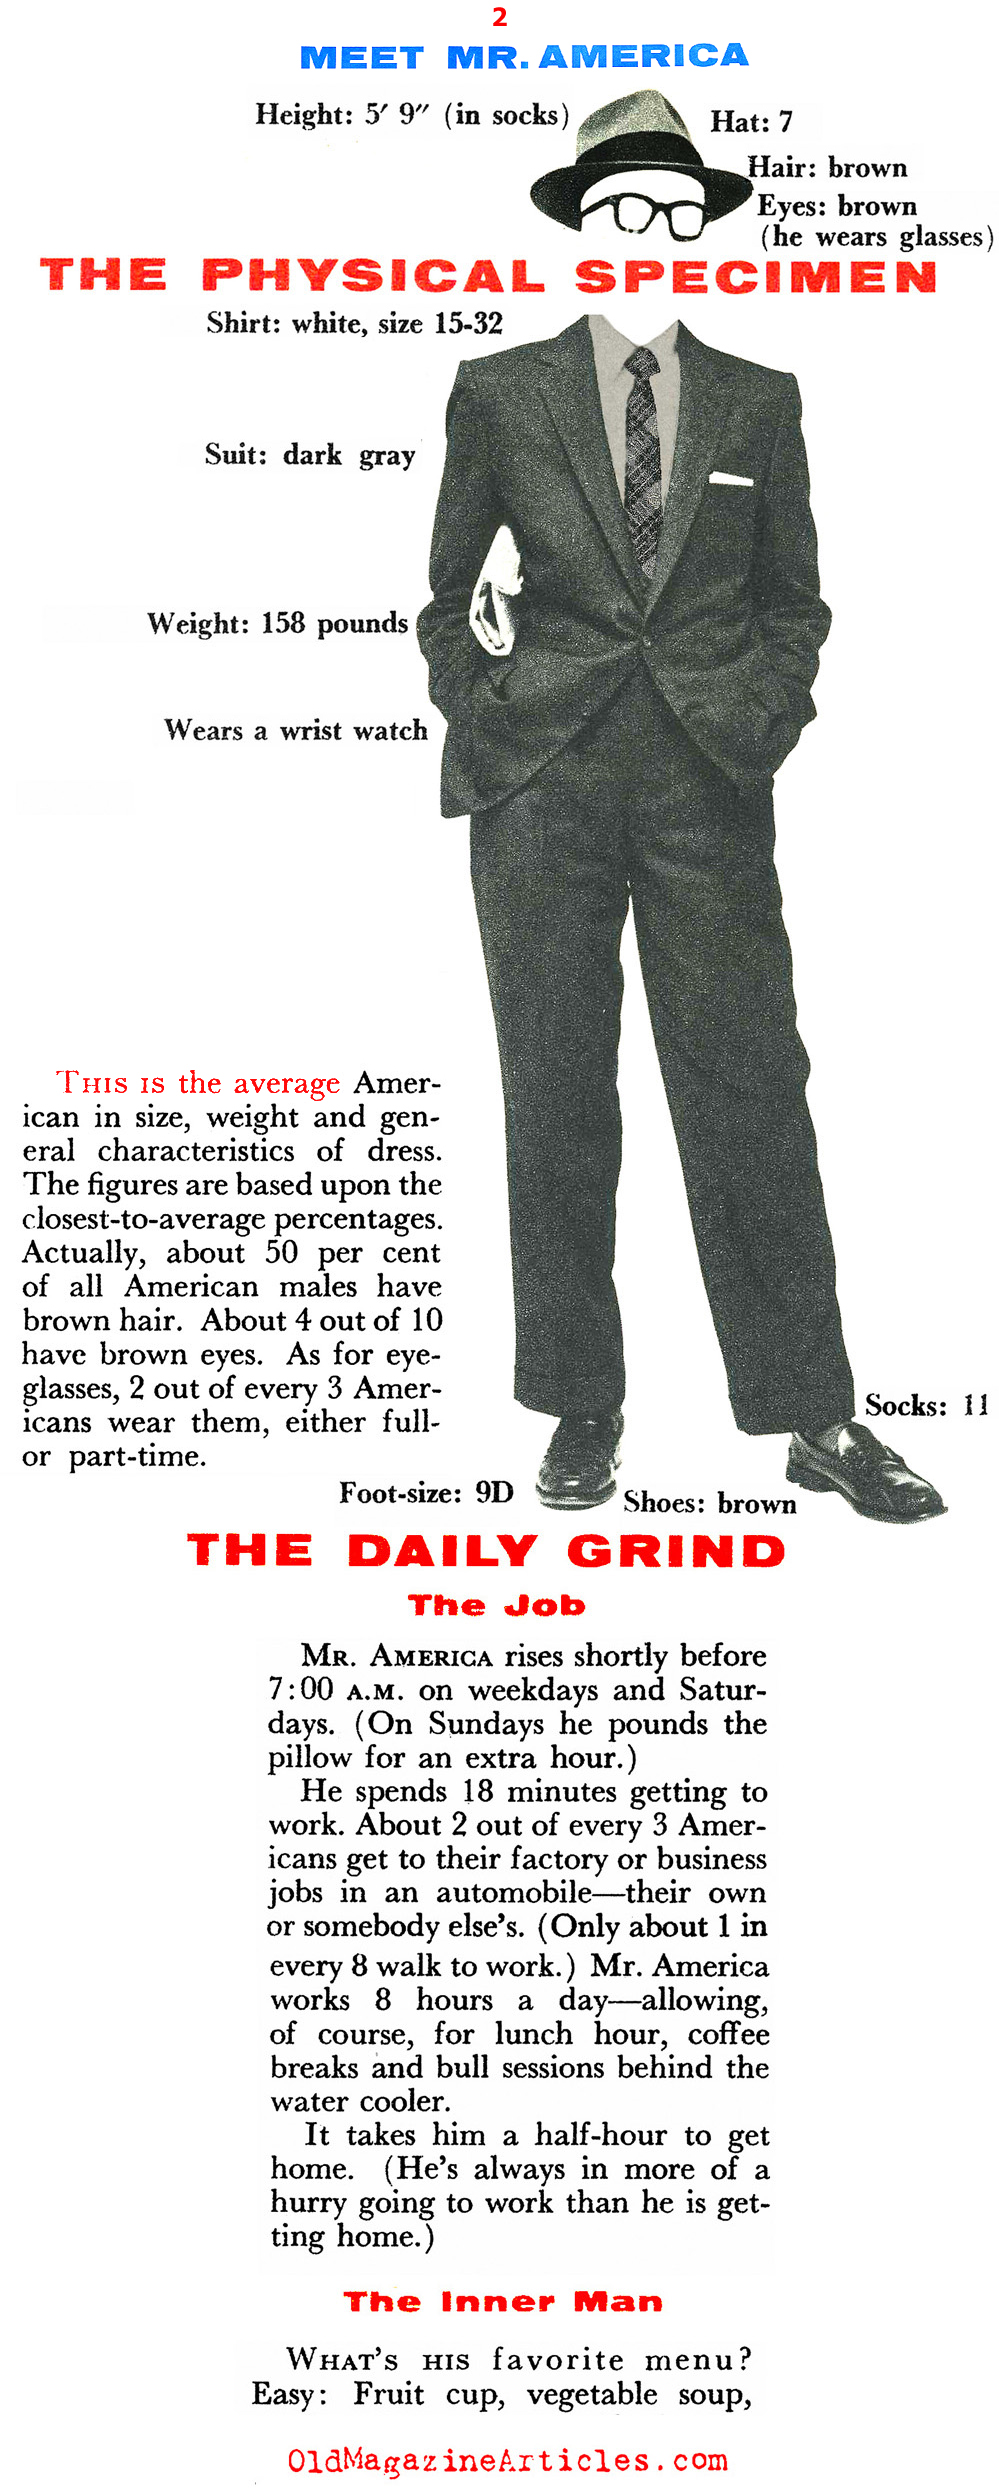 A Profile of ''Mr. America'' (Pageant Magazine, 1955)